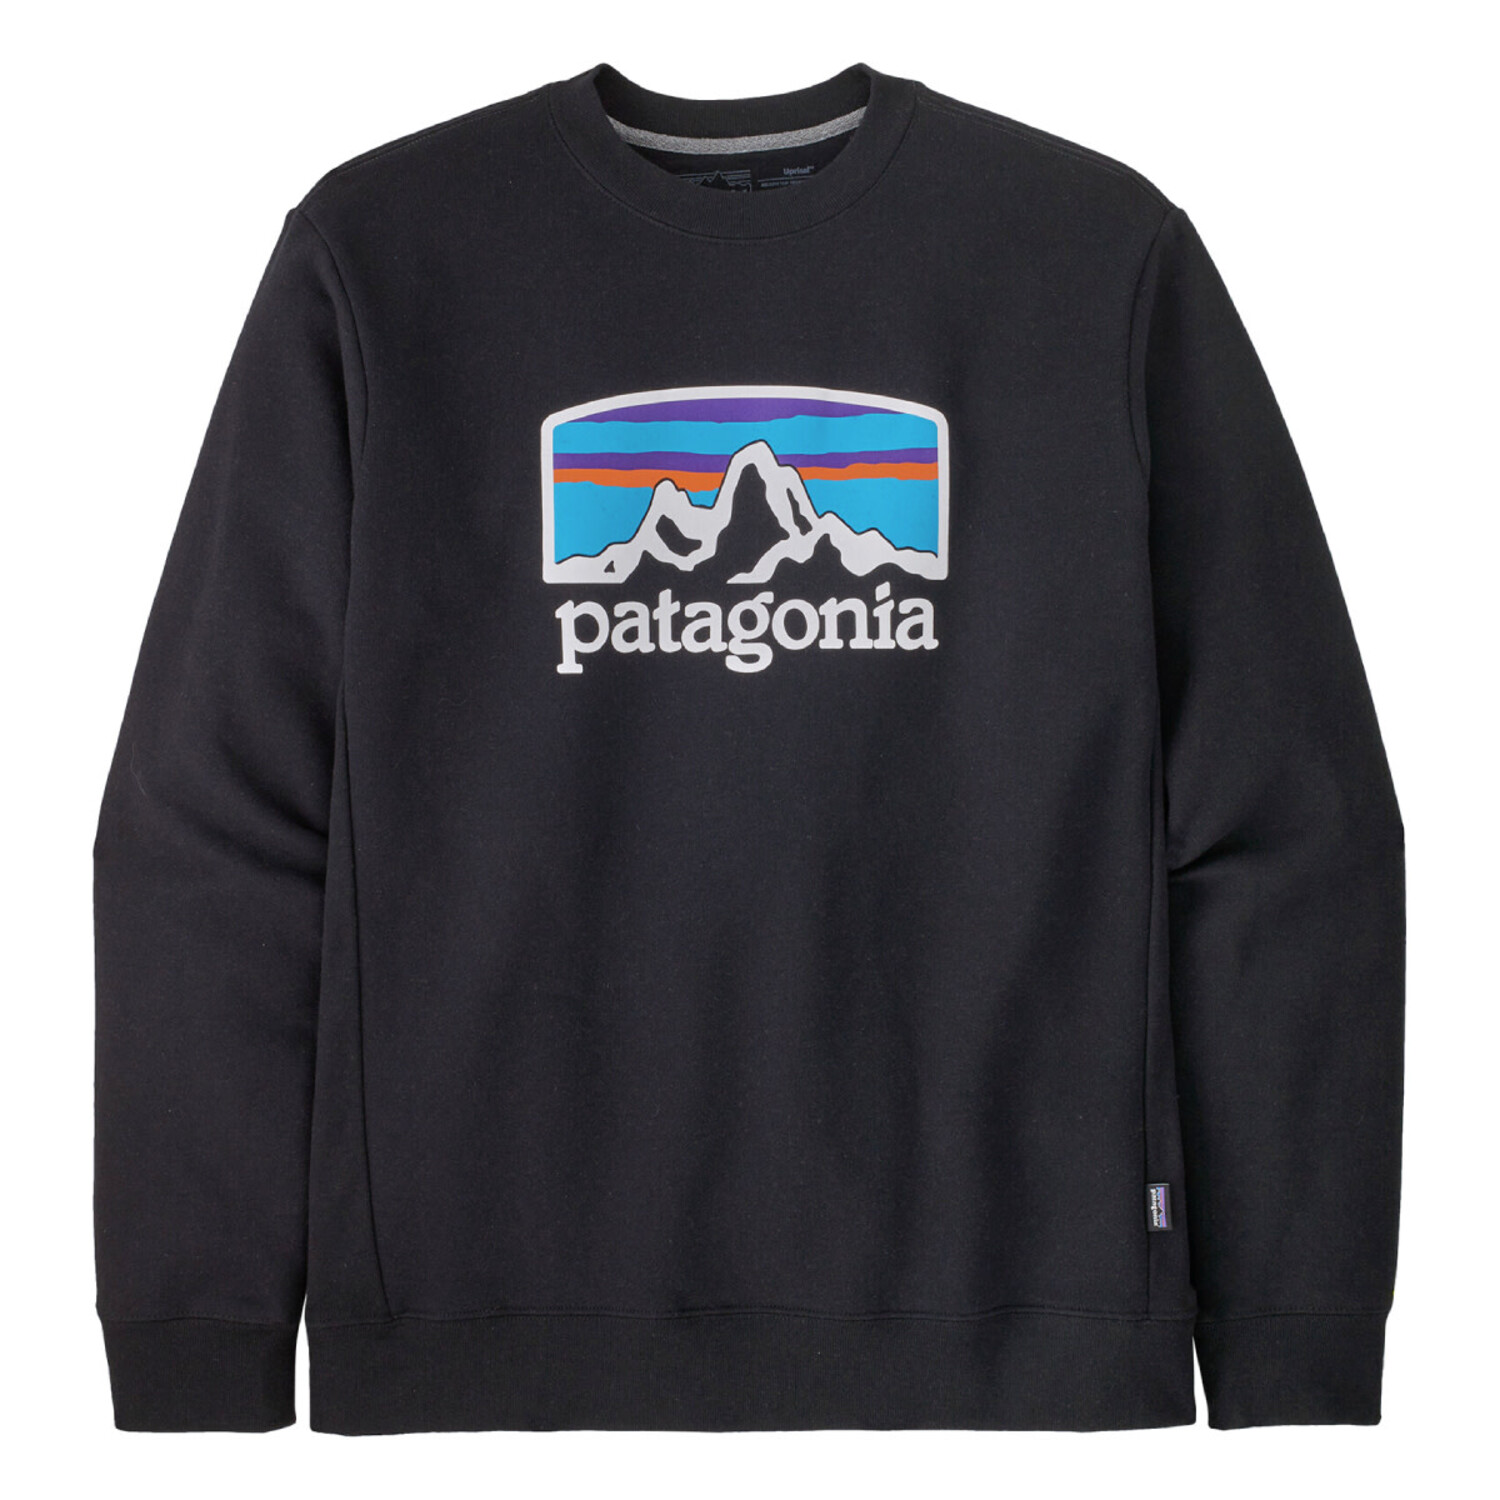 Men's Hoodies, Sweatshirts & Crewnecks by Patagonia